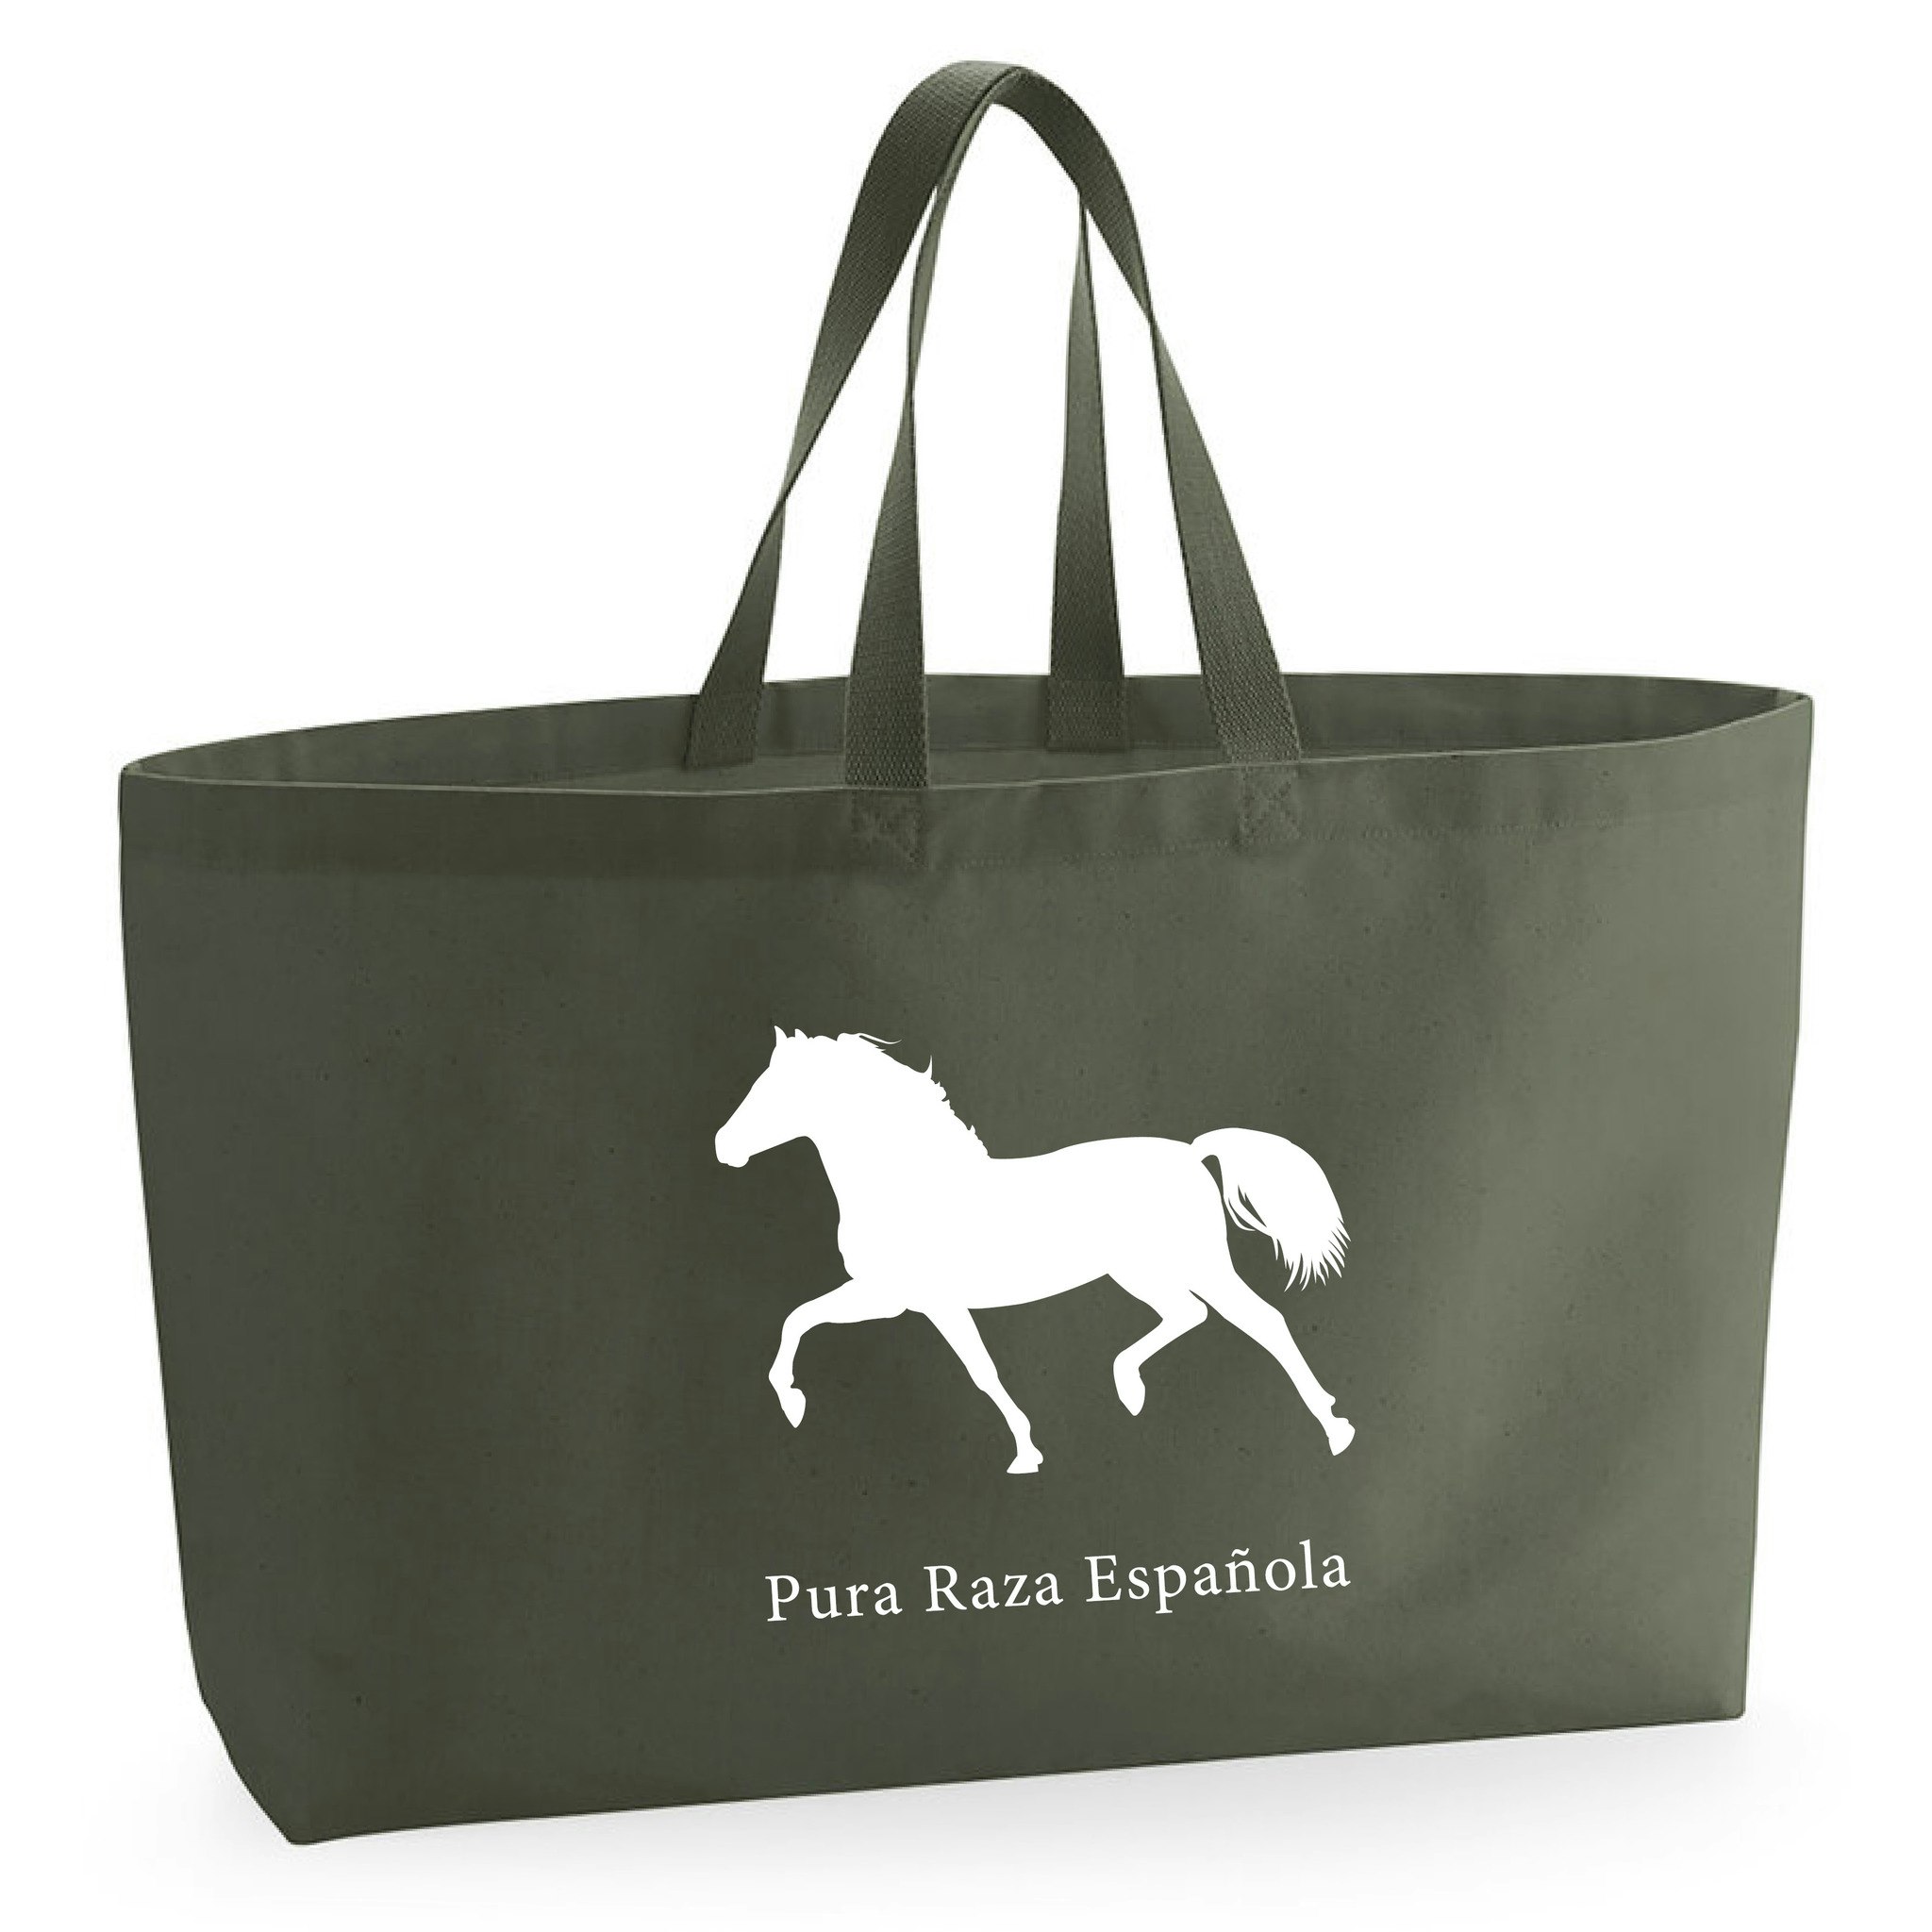 Tygkasse Pura Raza Española - Oversized bag